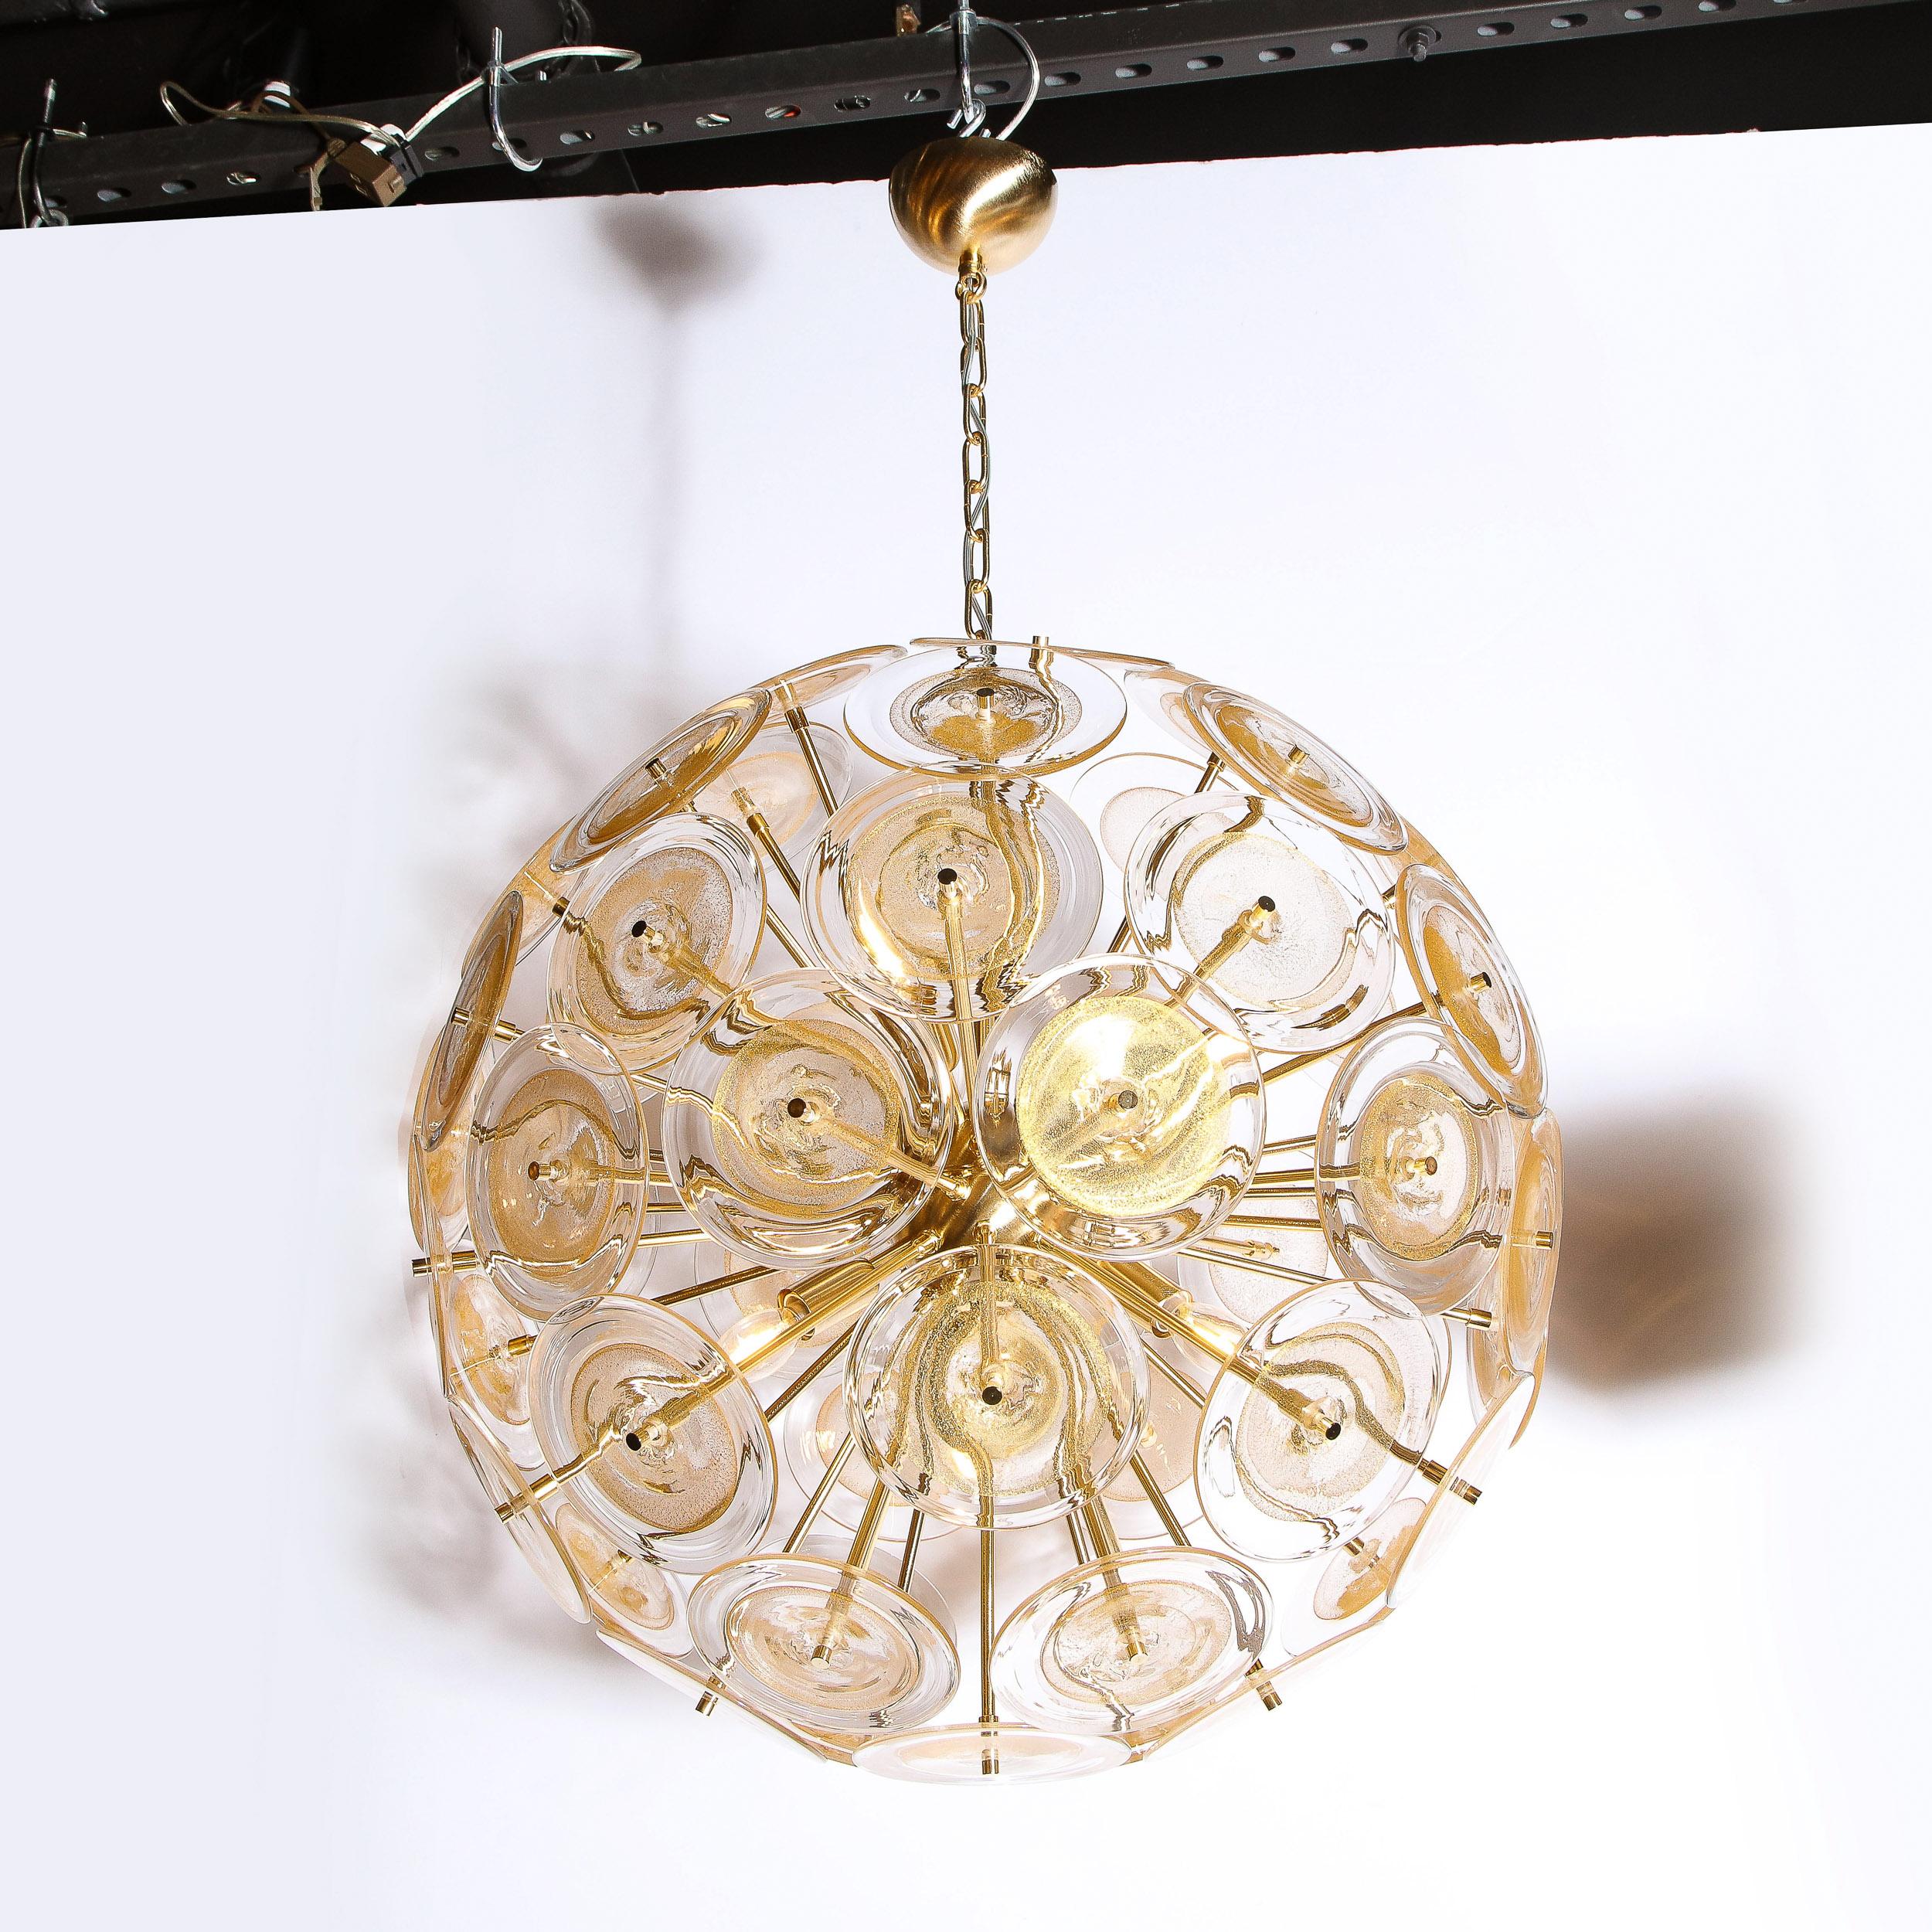 Brushed Modernist Brass Sputnik Chandelier W/ Handblown Translucent Murano Glass Discs For Sale